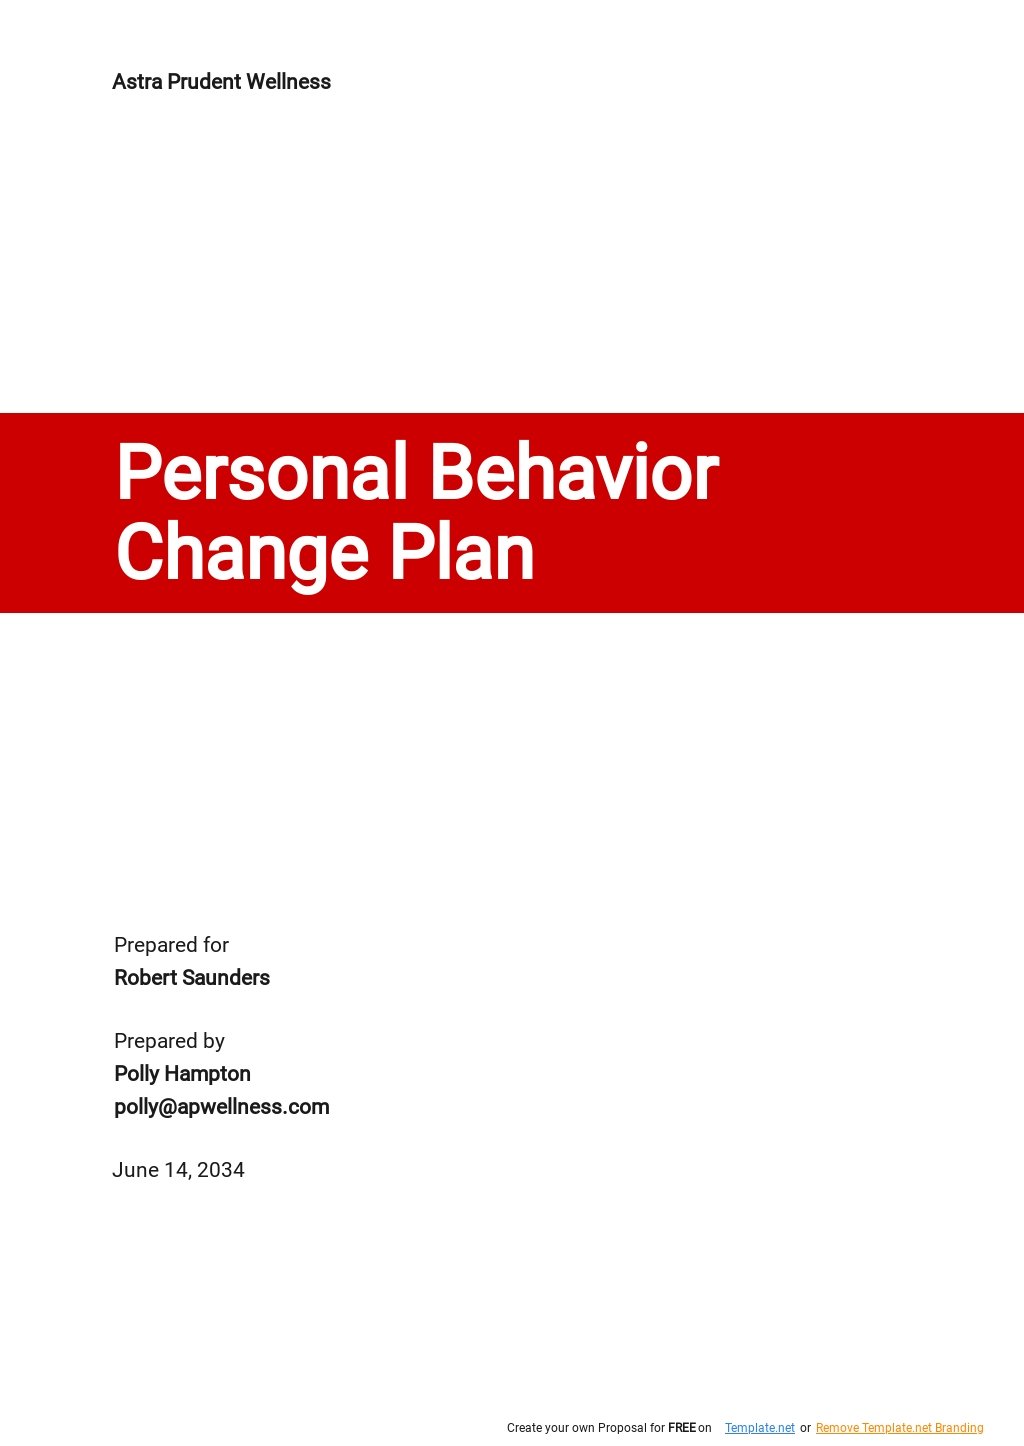 Personal Behavior Change Plan Template.jpe